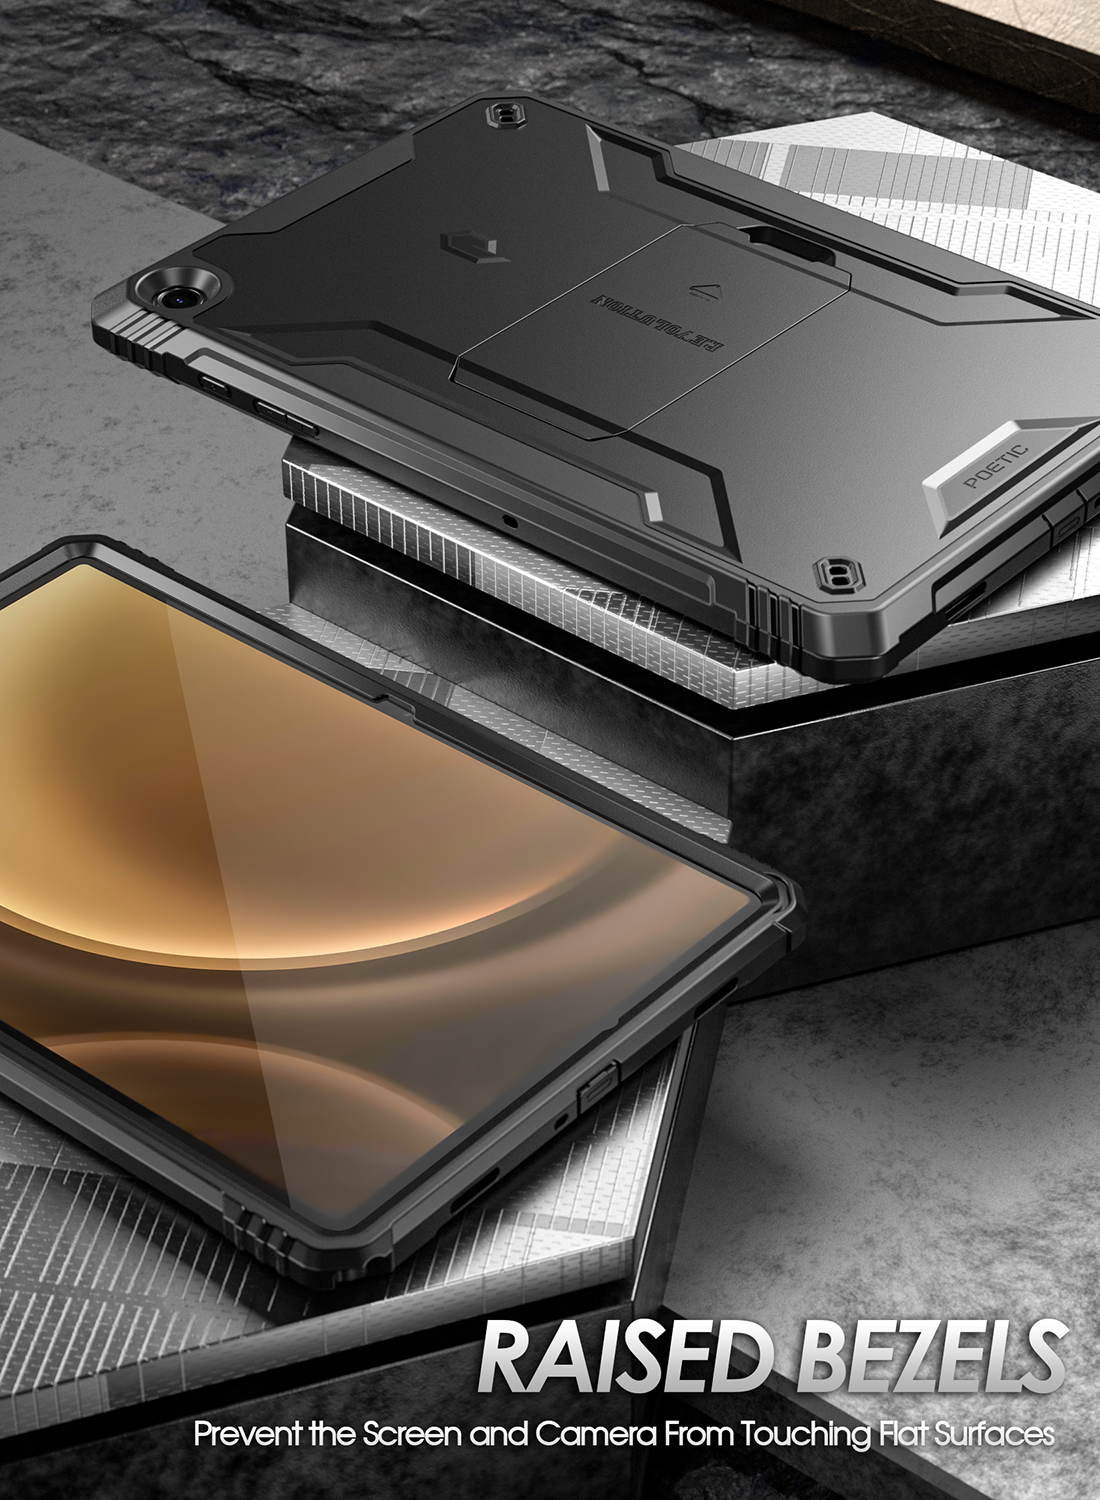 Galaxy Tab A9 Plus Case – Poetic Cases